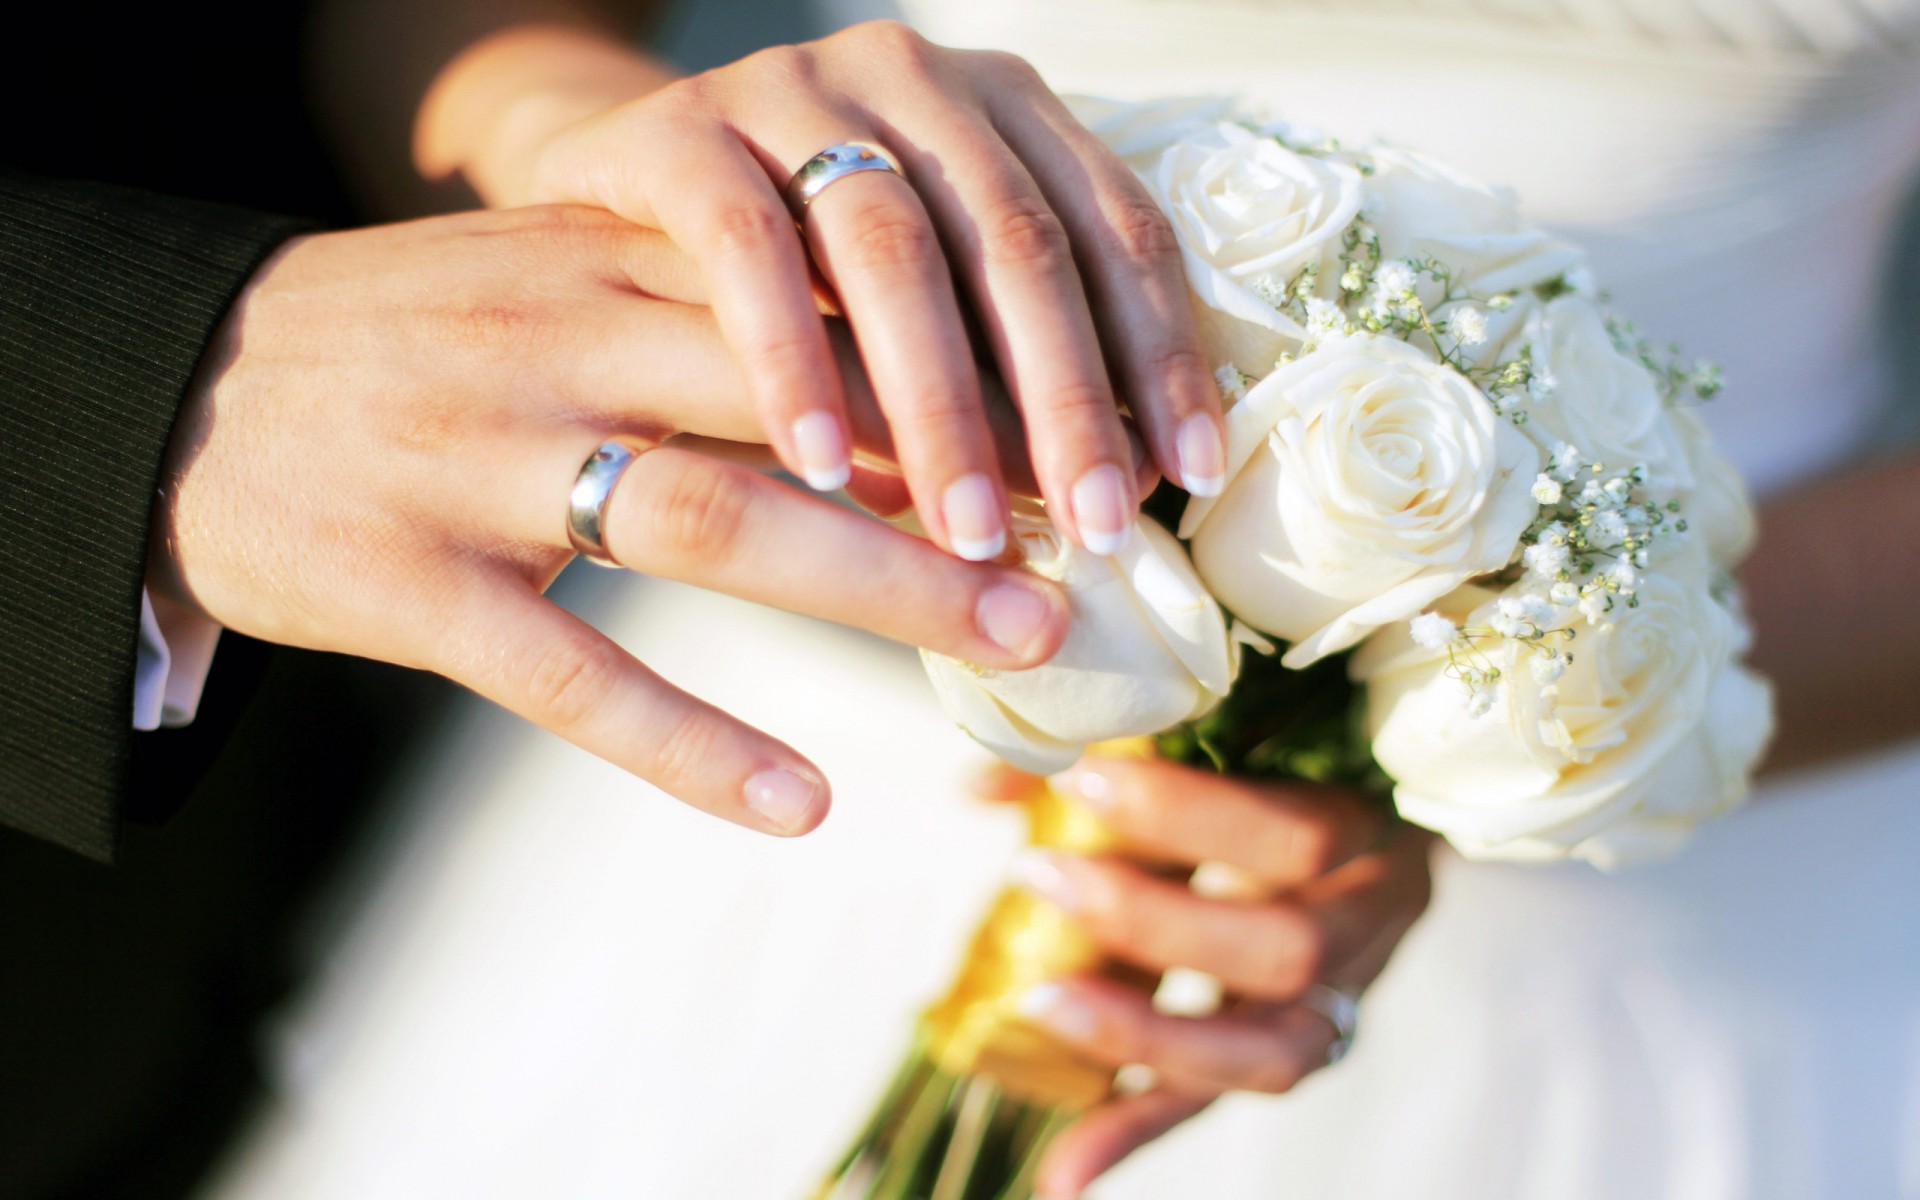 Hands wedding rings bouquet roses Straipsniai.lt